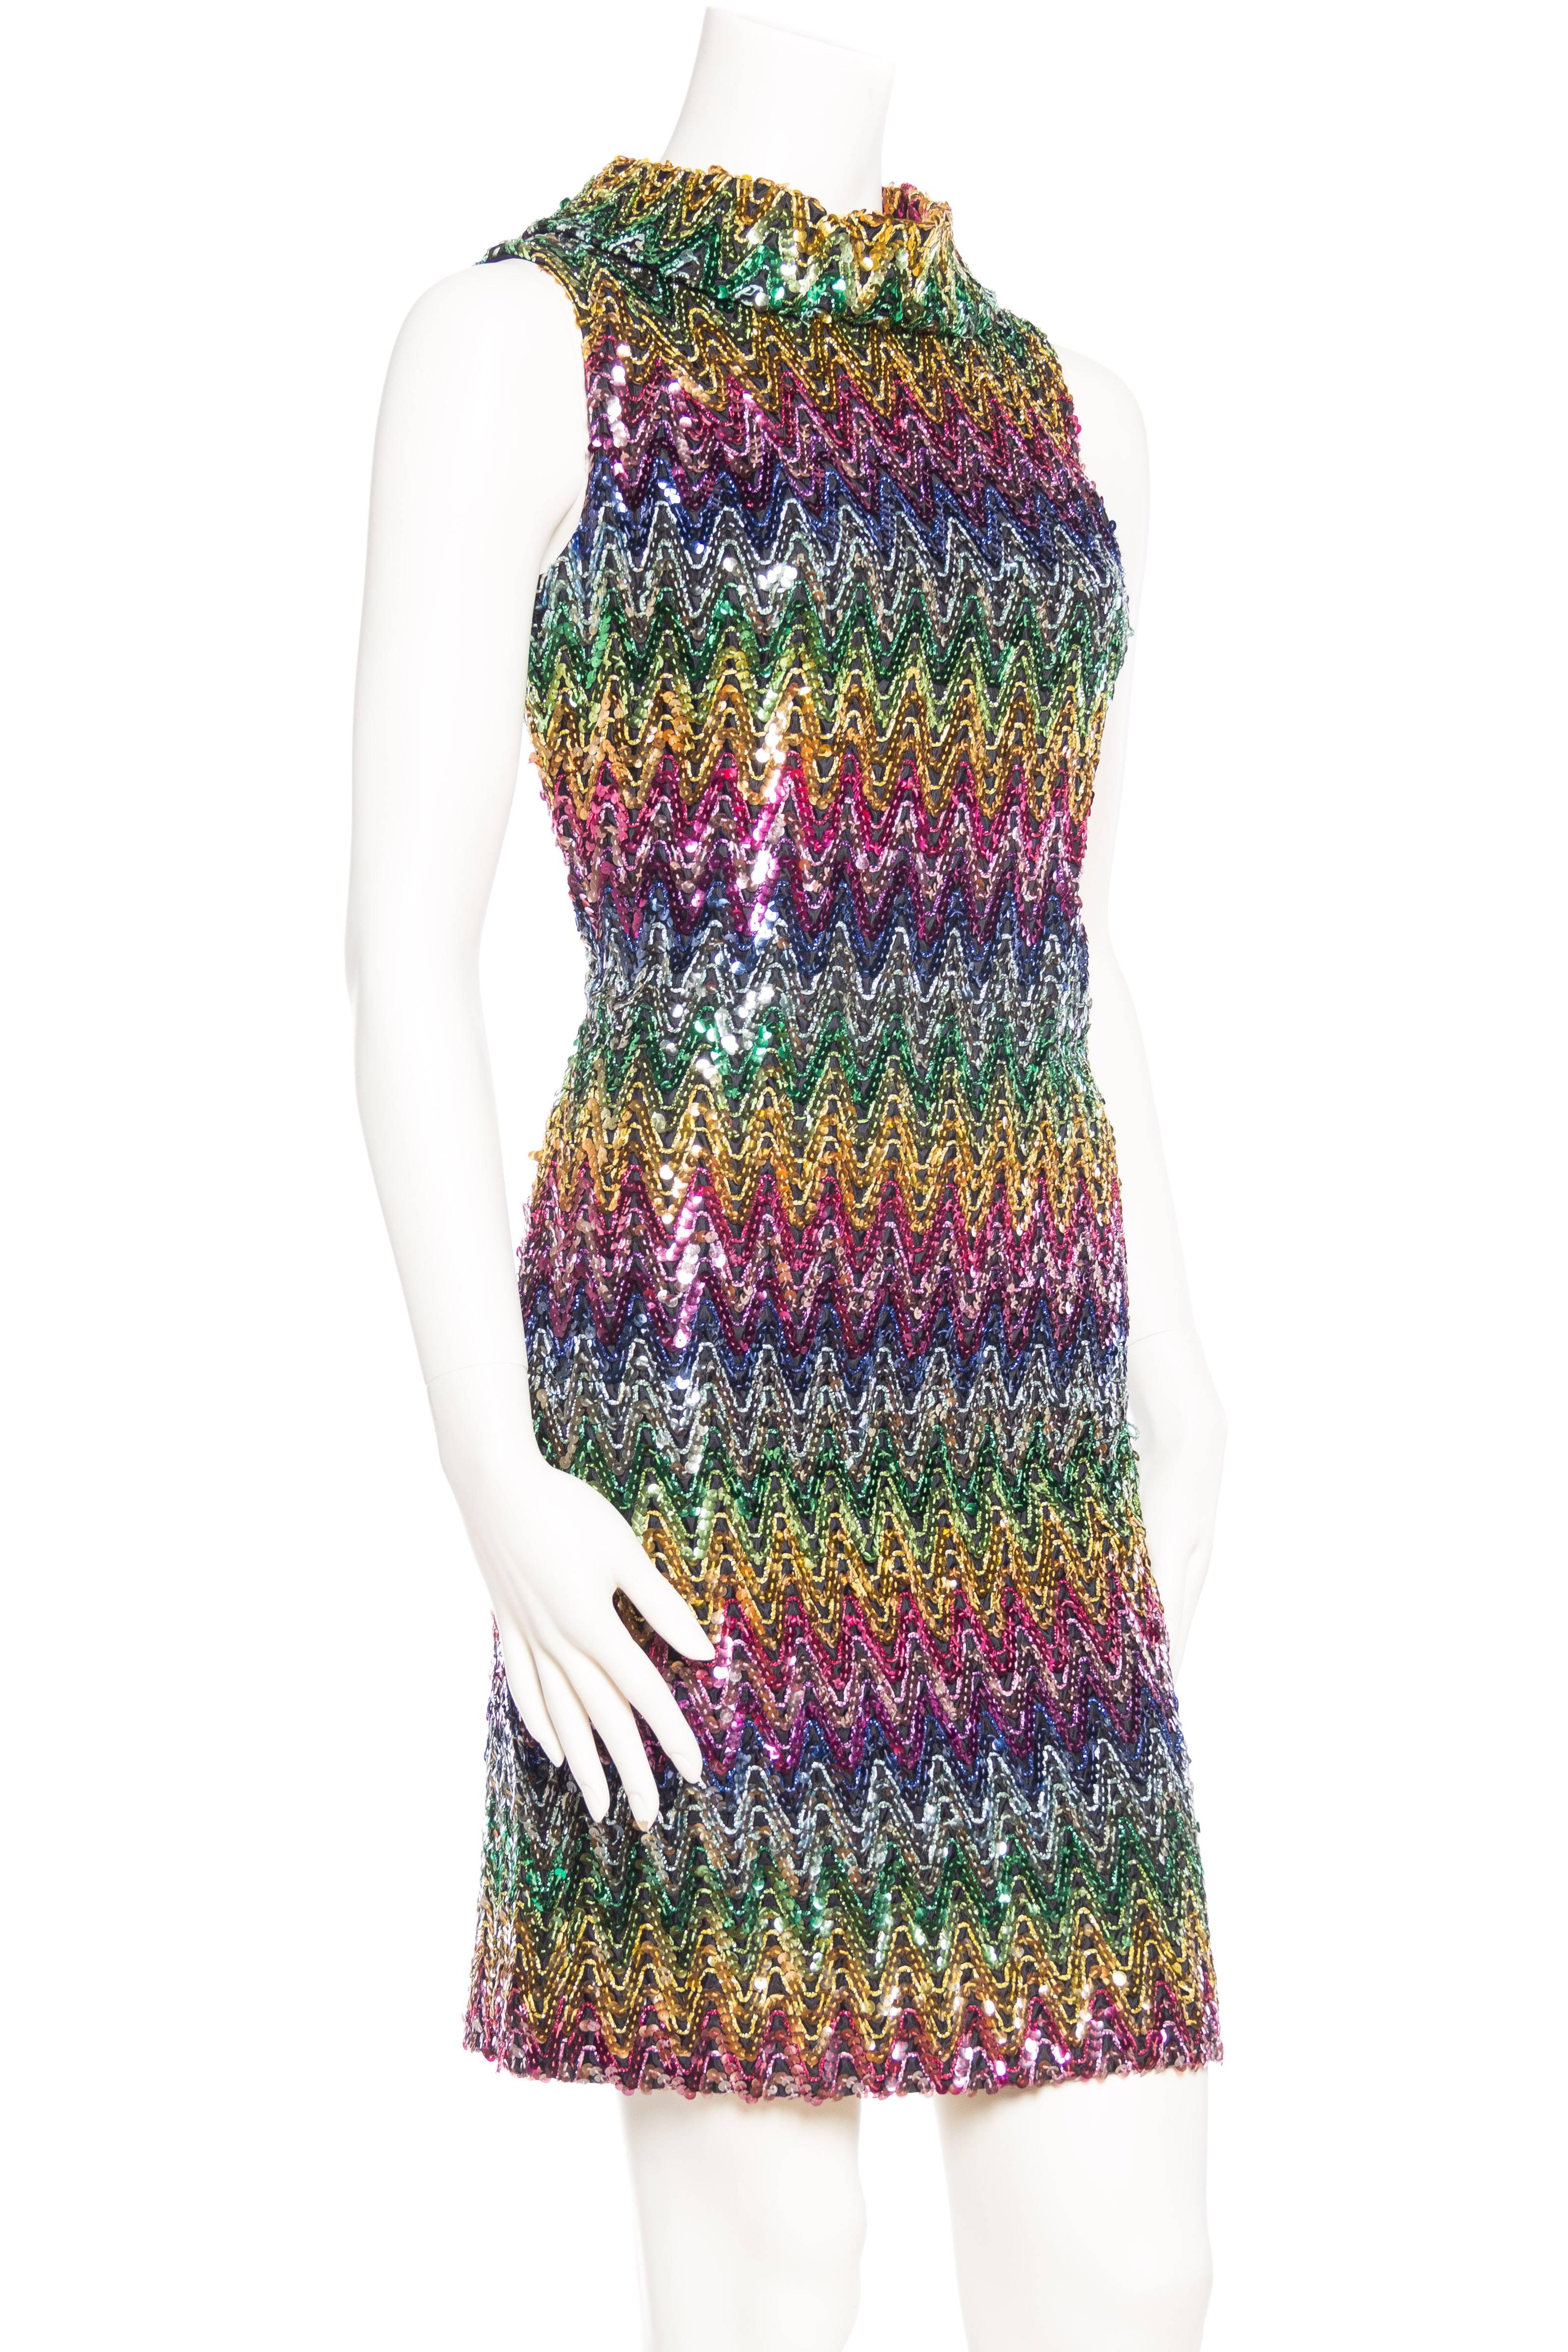 Women's 1960s Disco Rainbow Sequined Dress from Magnin